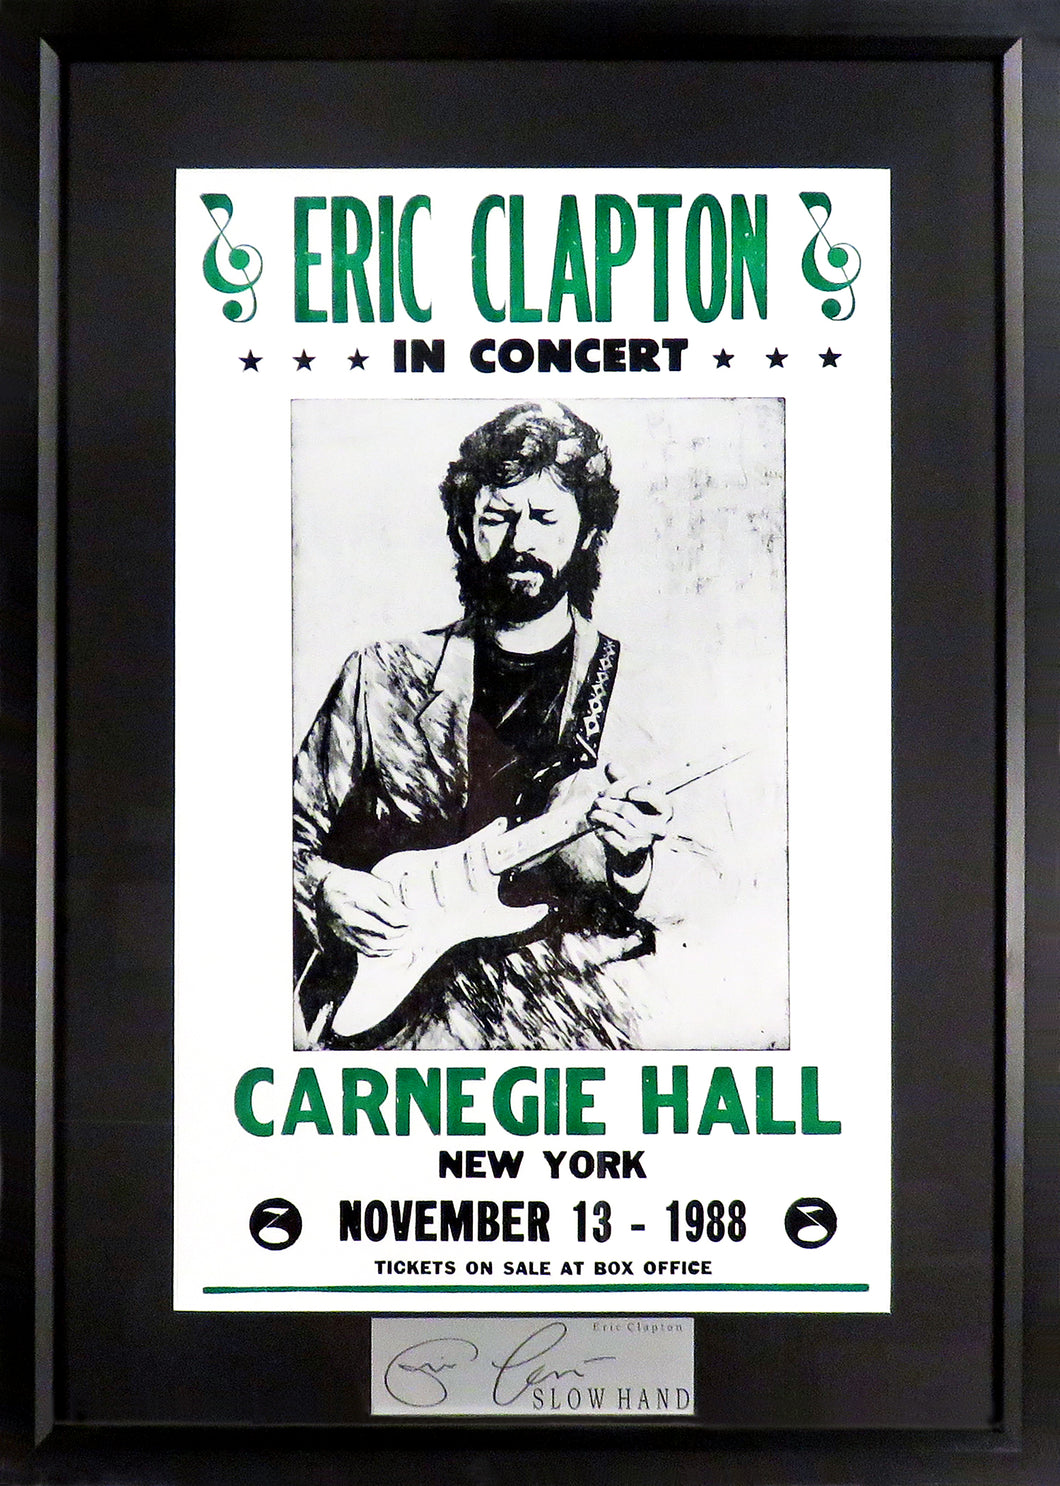 Eric Clapton @ Carnegie Hall Framed Concert Poster (Engraved Series)